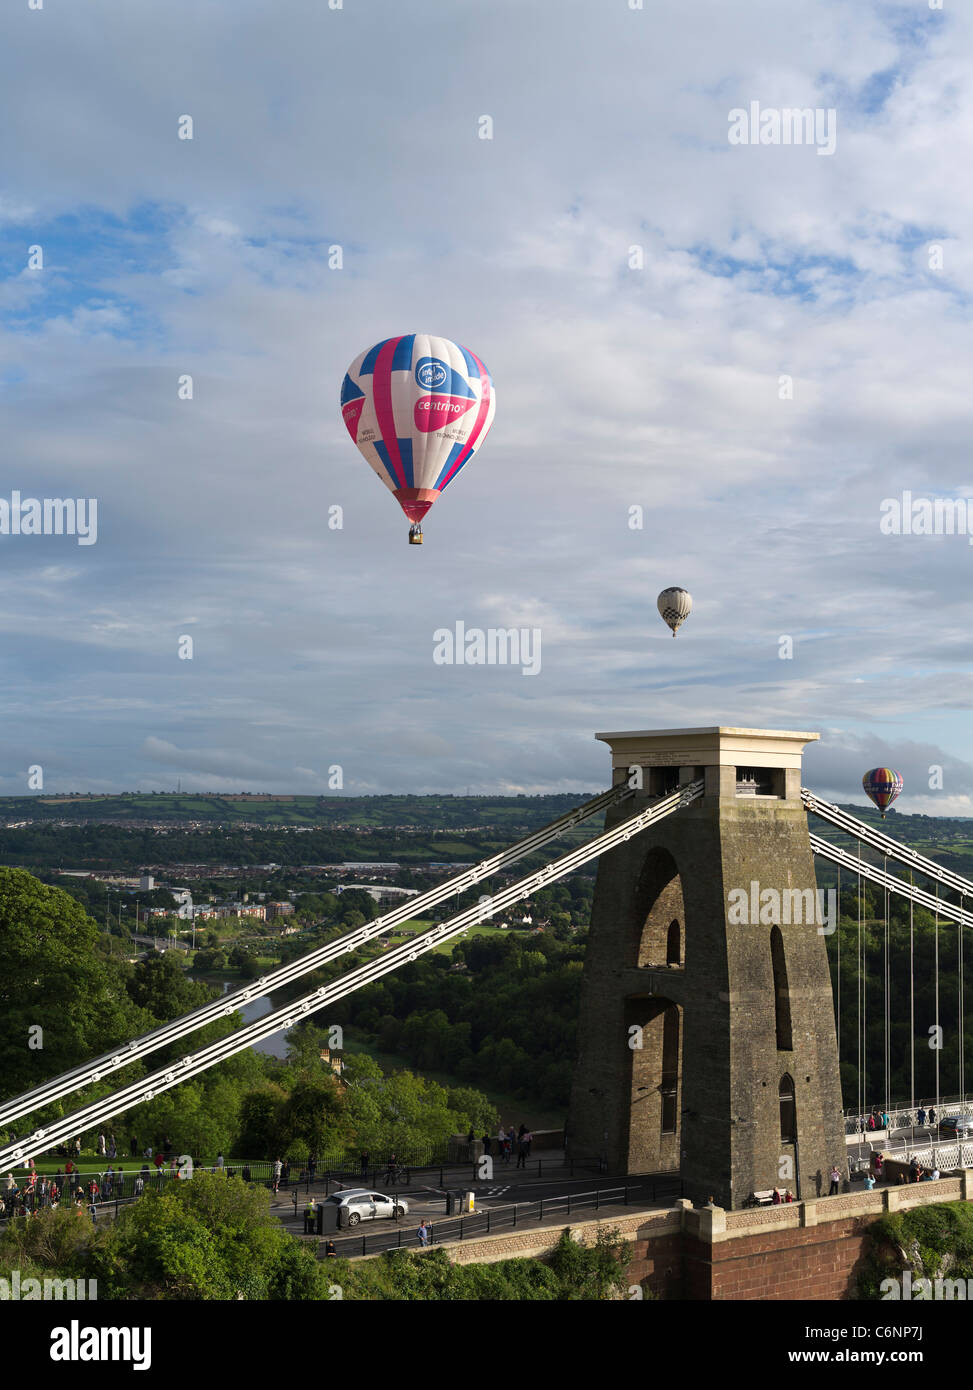 dh Balloon international festival CLIFTON BRISTOL Hot air balloons flying above Suspension bridge uk fiesta England UK Stock Photo